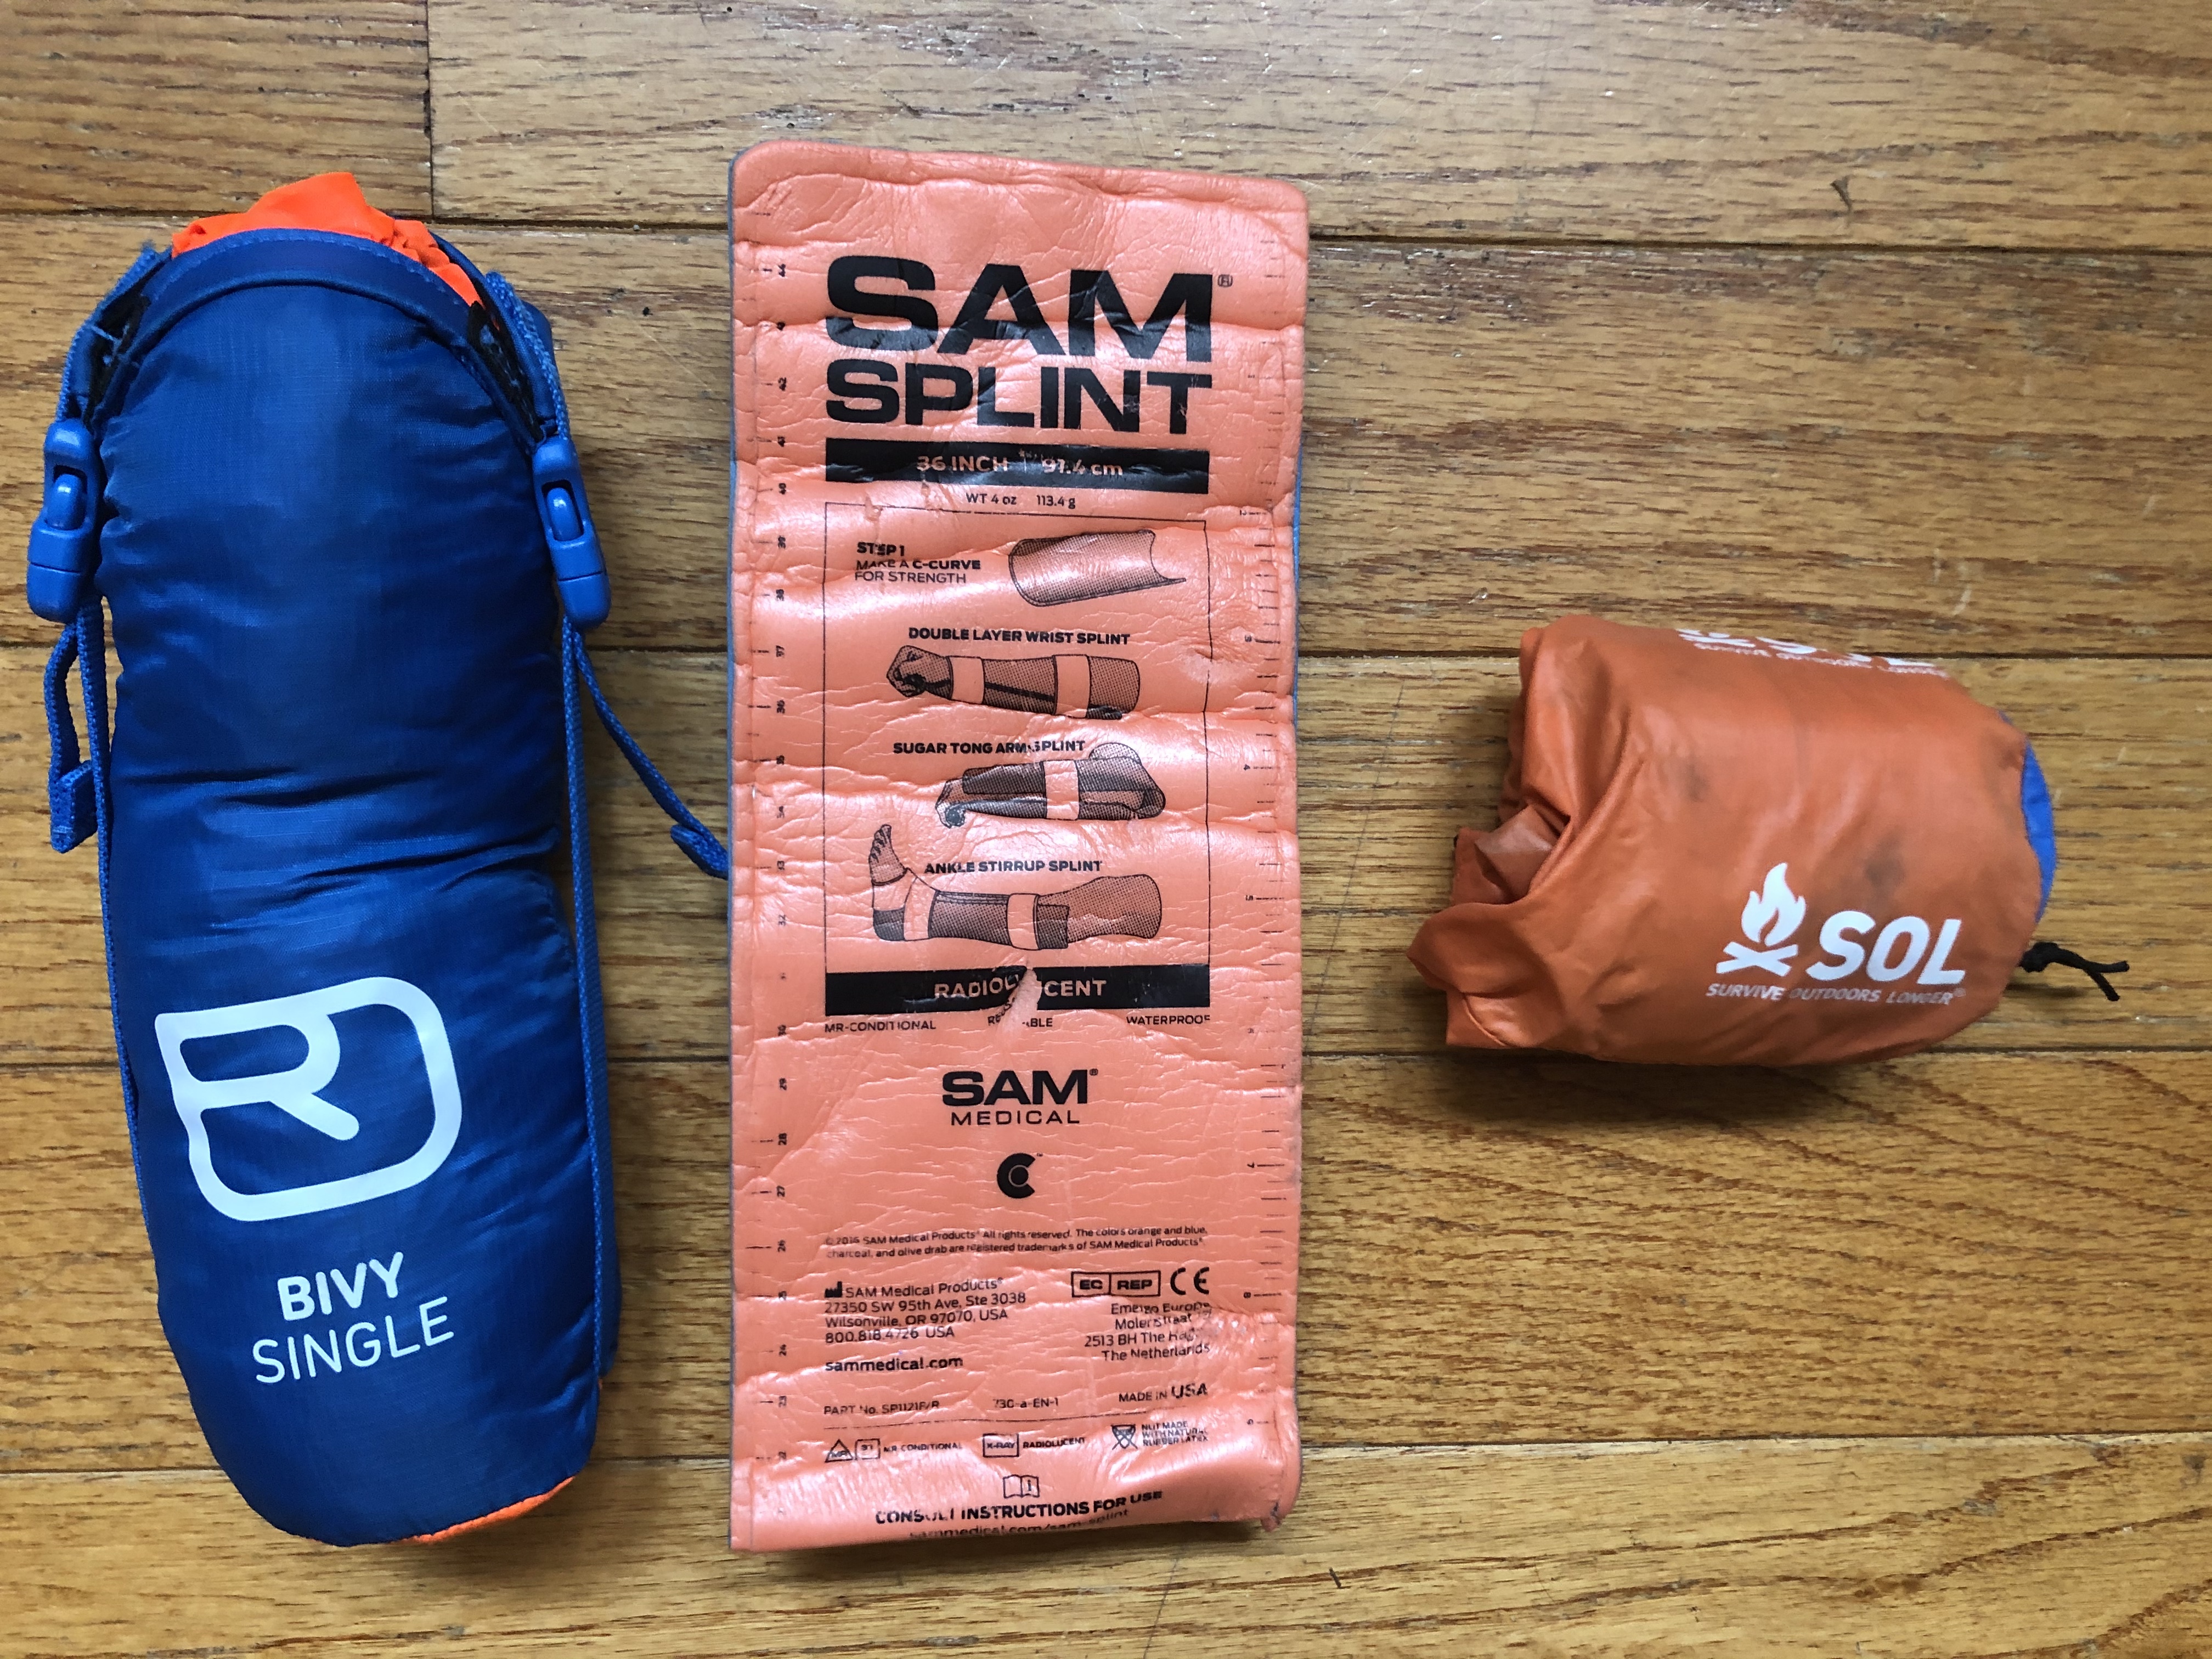 Adventure Medical Kits First Aid Kits